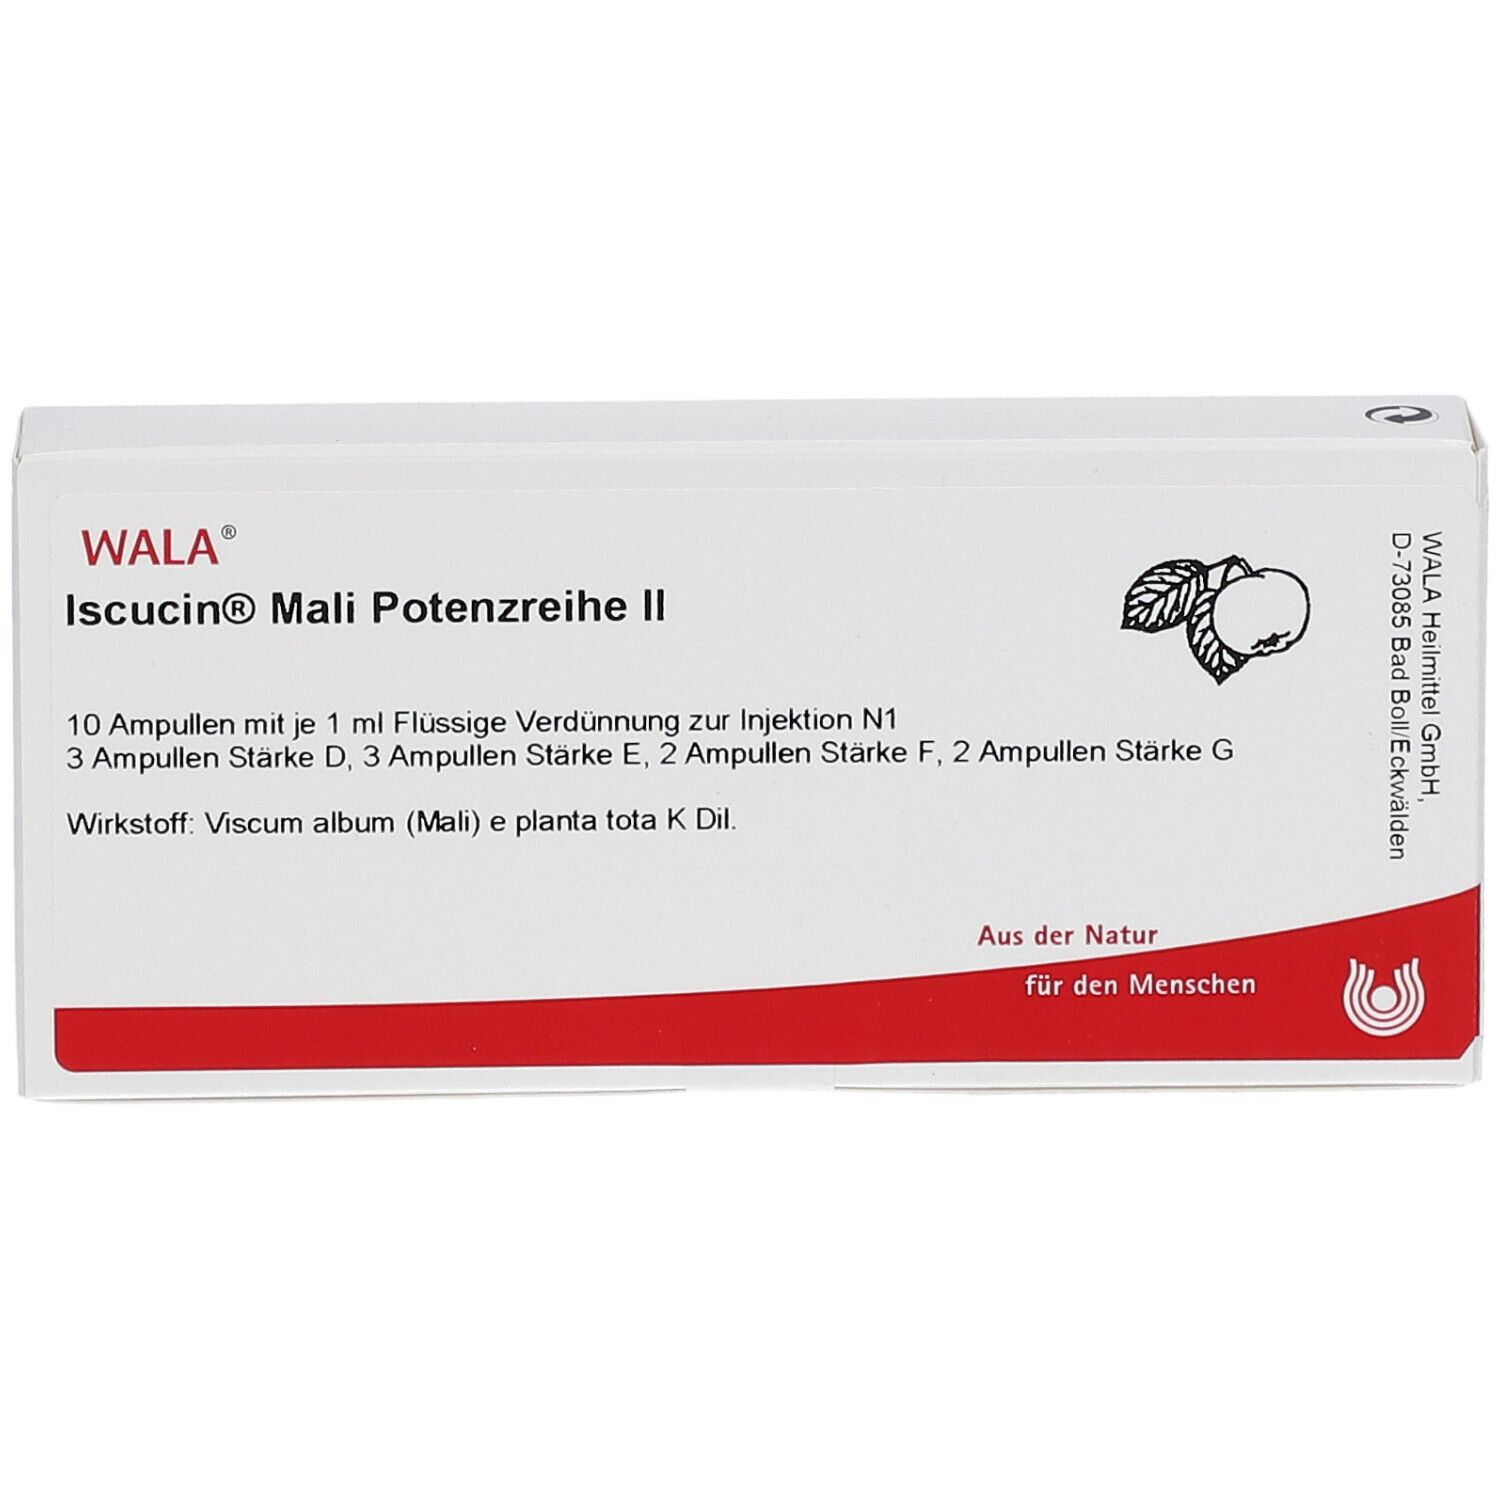 WALA® Iscucin Mali Potenzreihe Ii